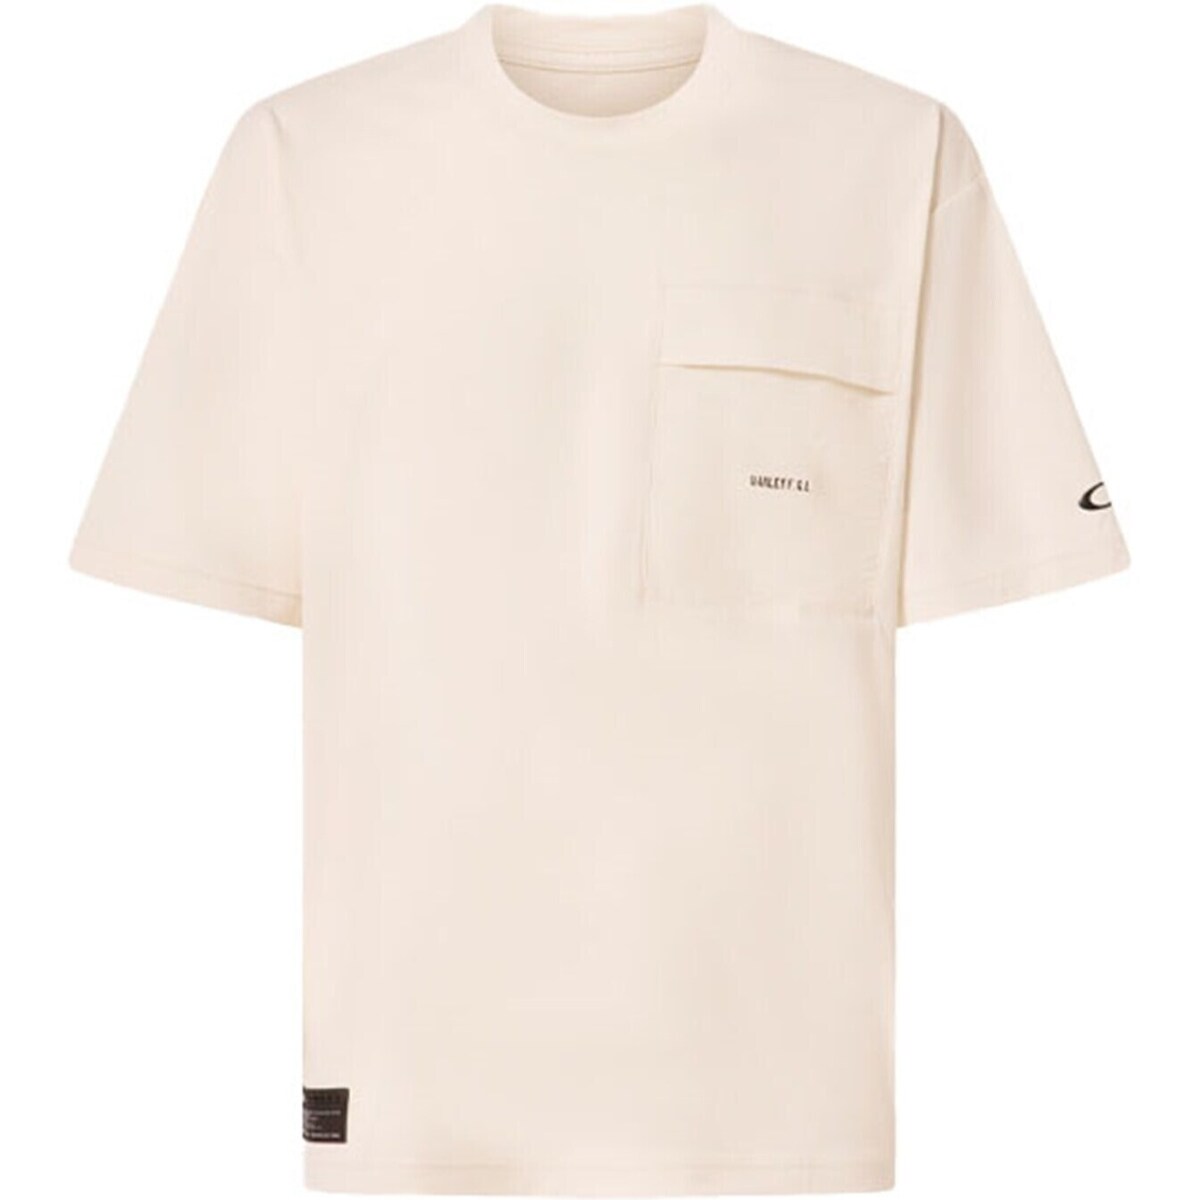 Vêtements Homme Tally cotton rib T-shirt Braun FOA406369 Autres